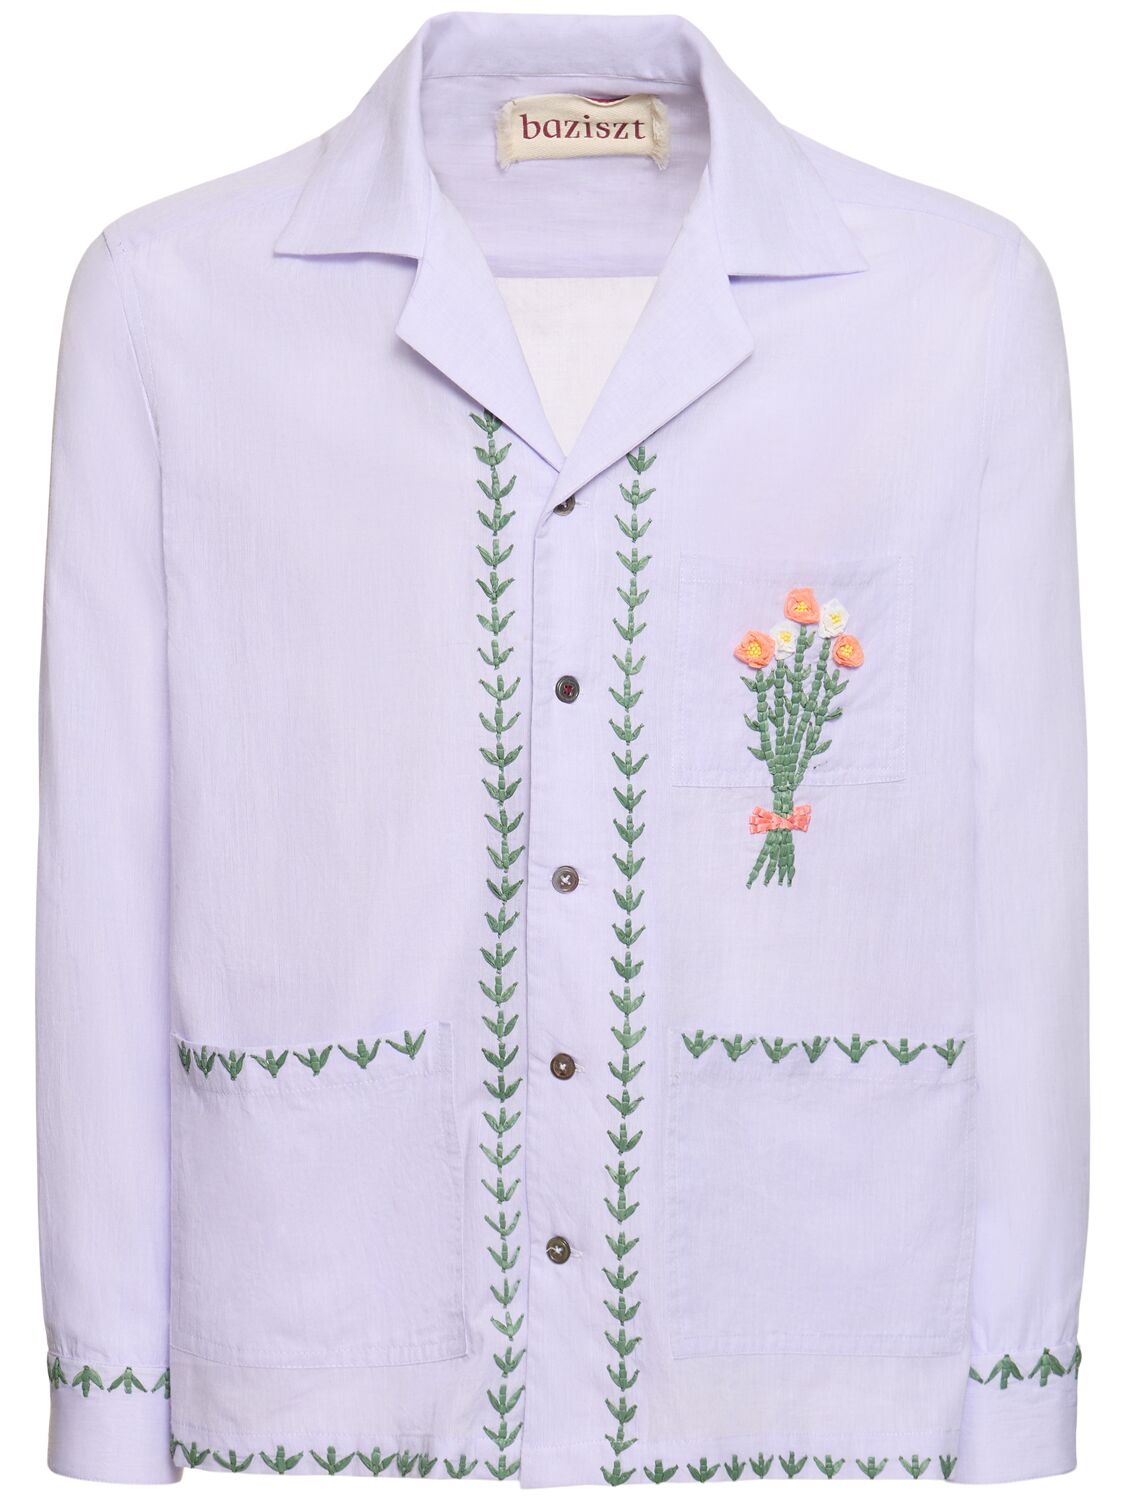 Baziszt Flower Cotton Shirt In Purple